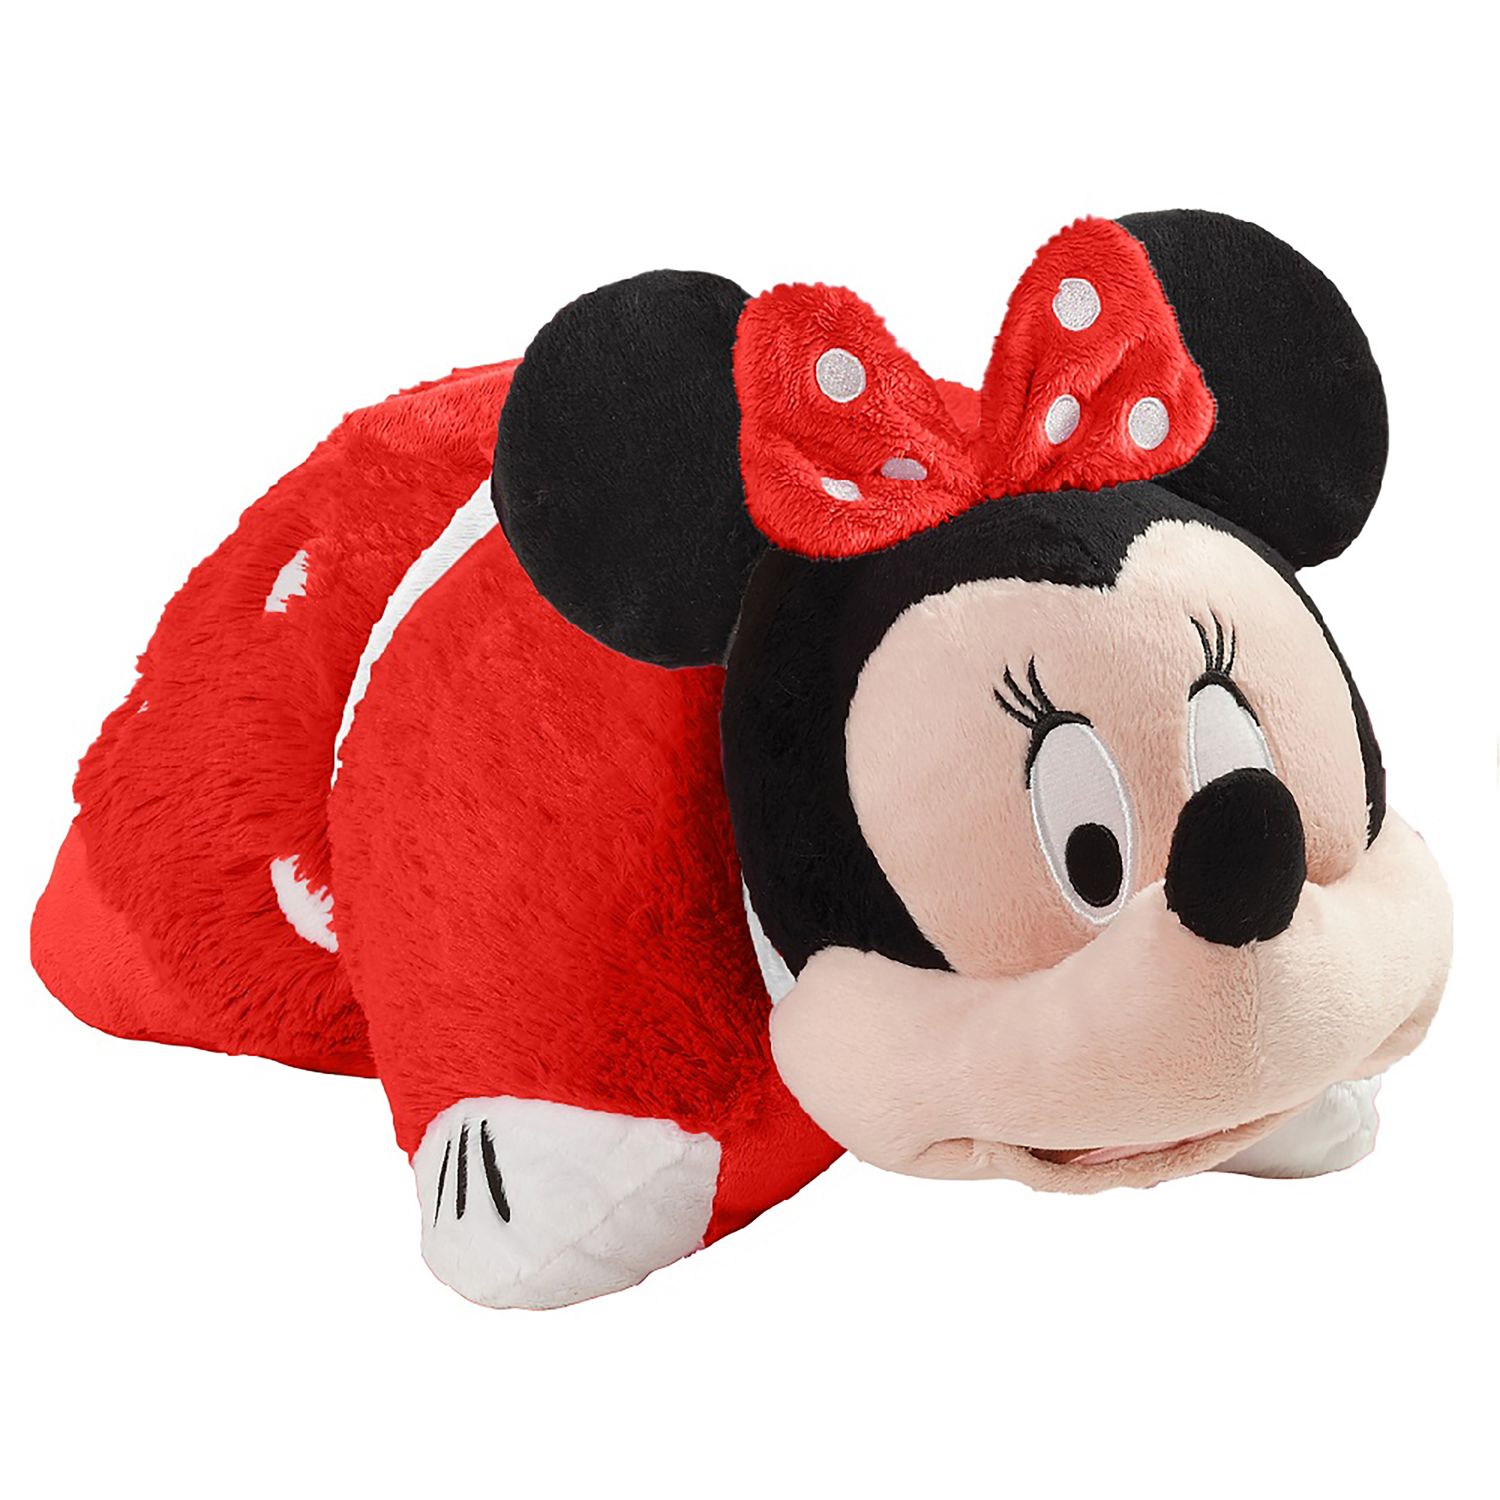 disney minnie mouse stuffed animal